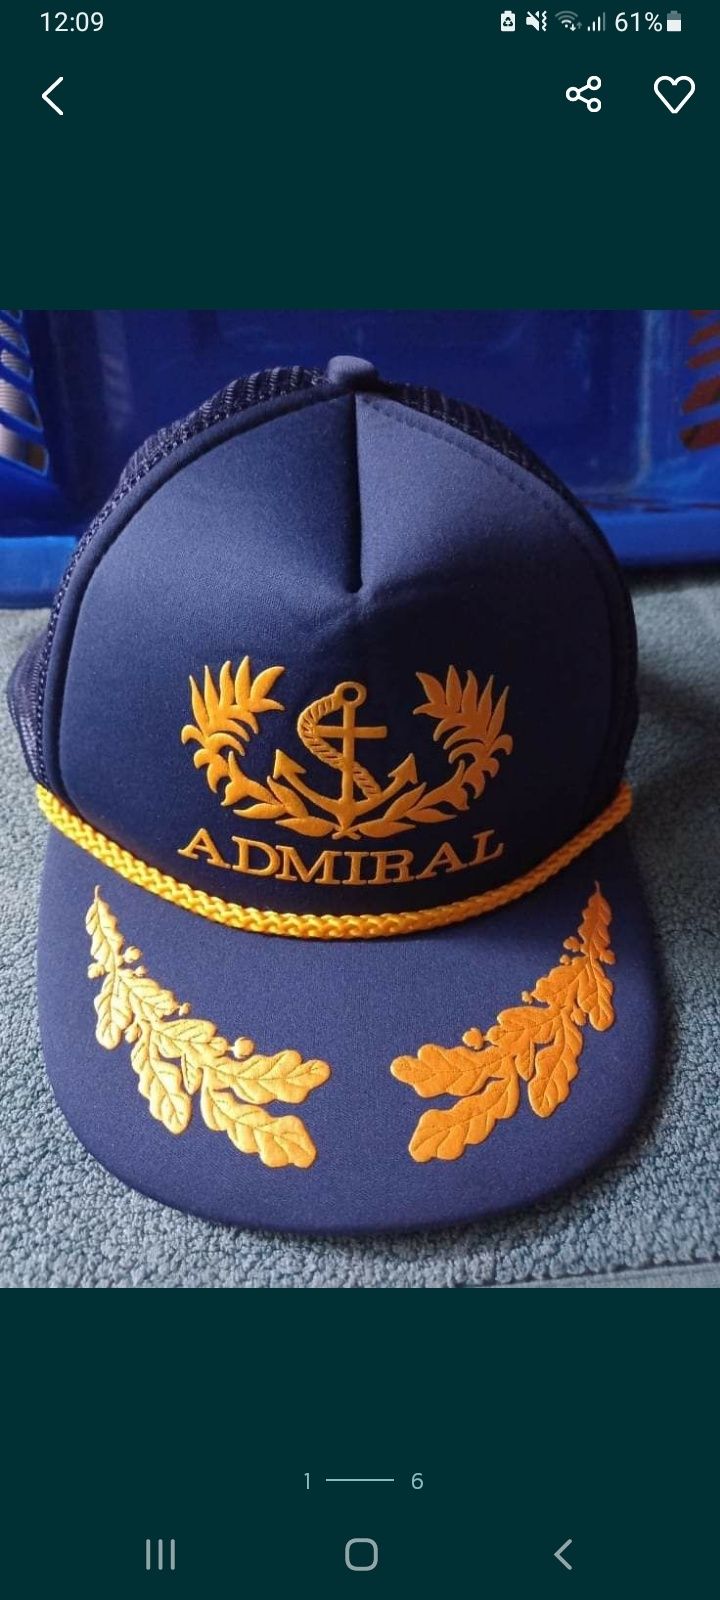 Zestaw czapek admiral i inne